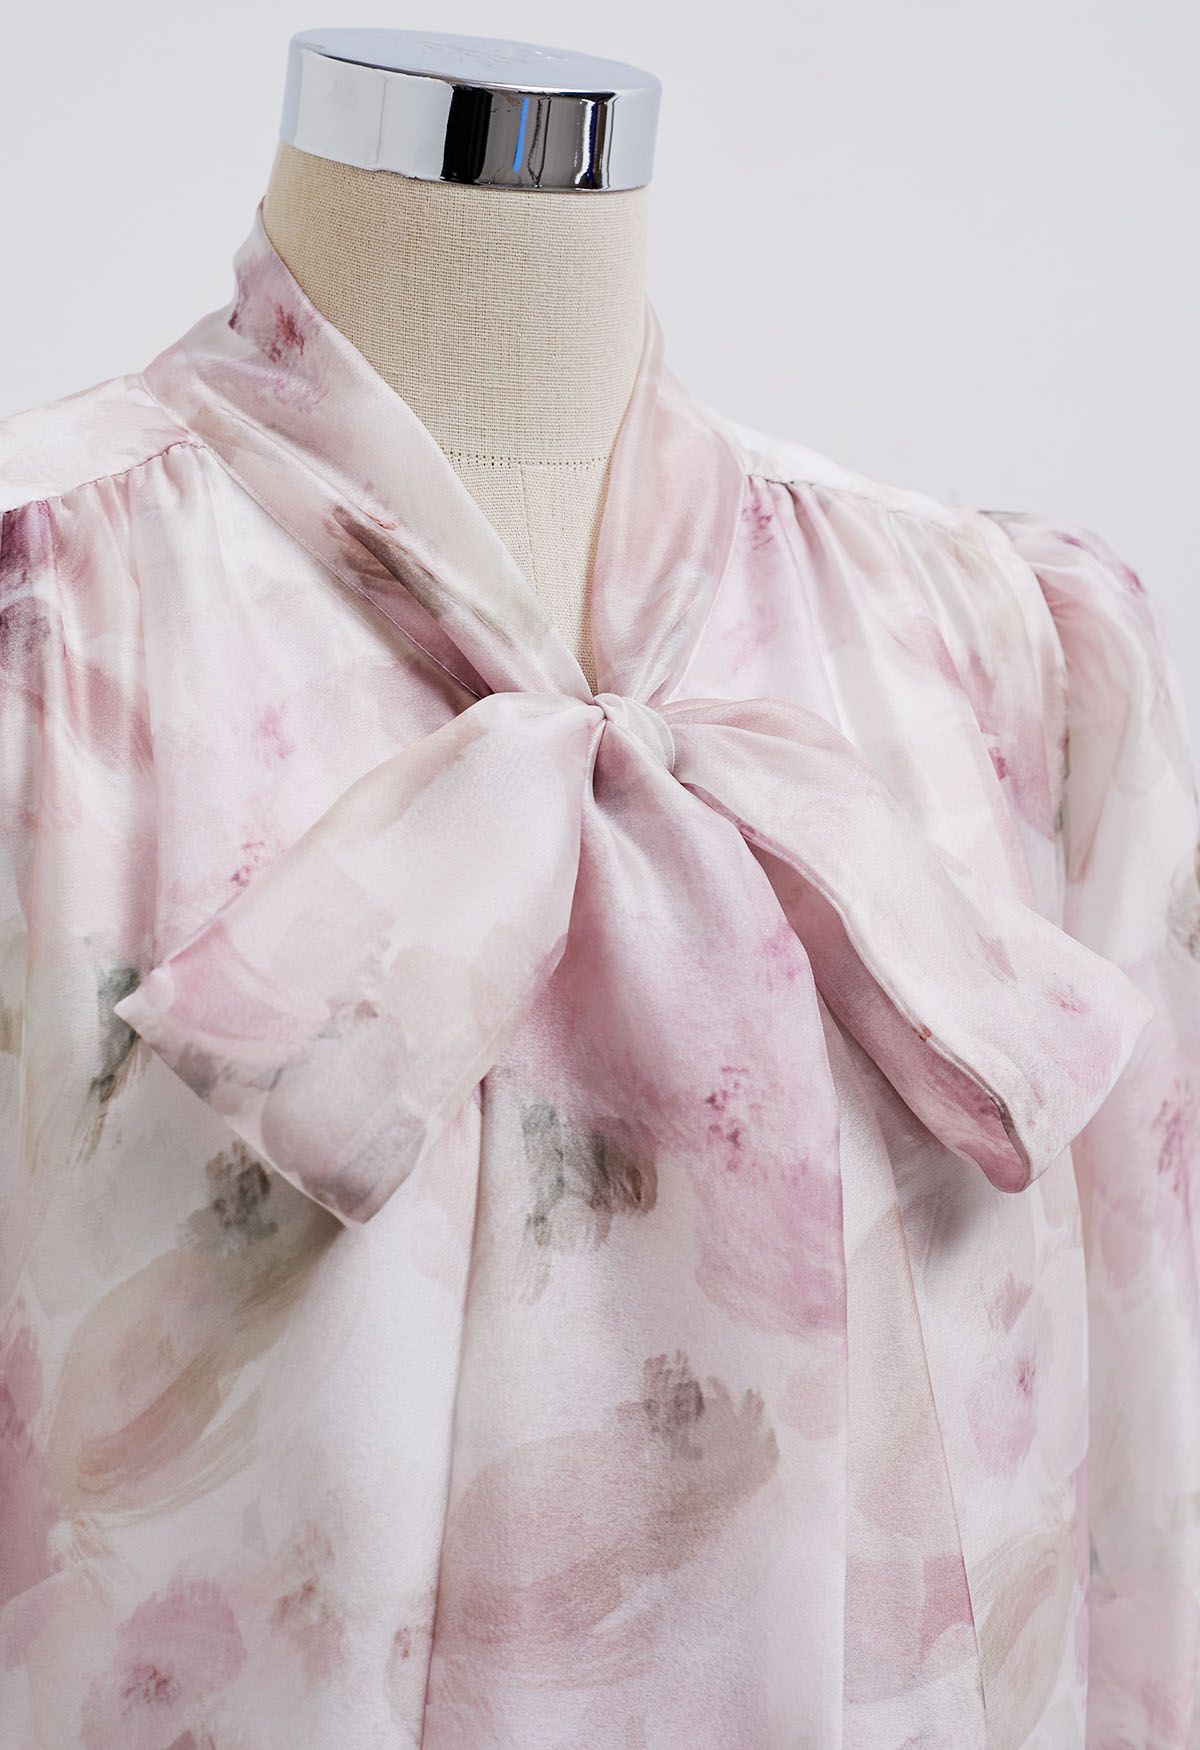 Transparentes Hemd mit Schleife und Aquarellblumenmuster in Rosa